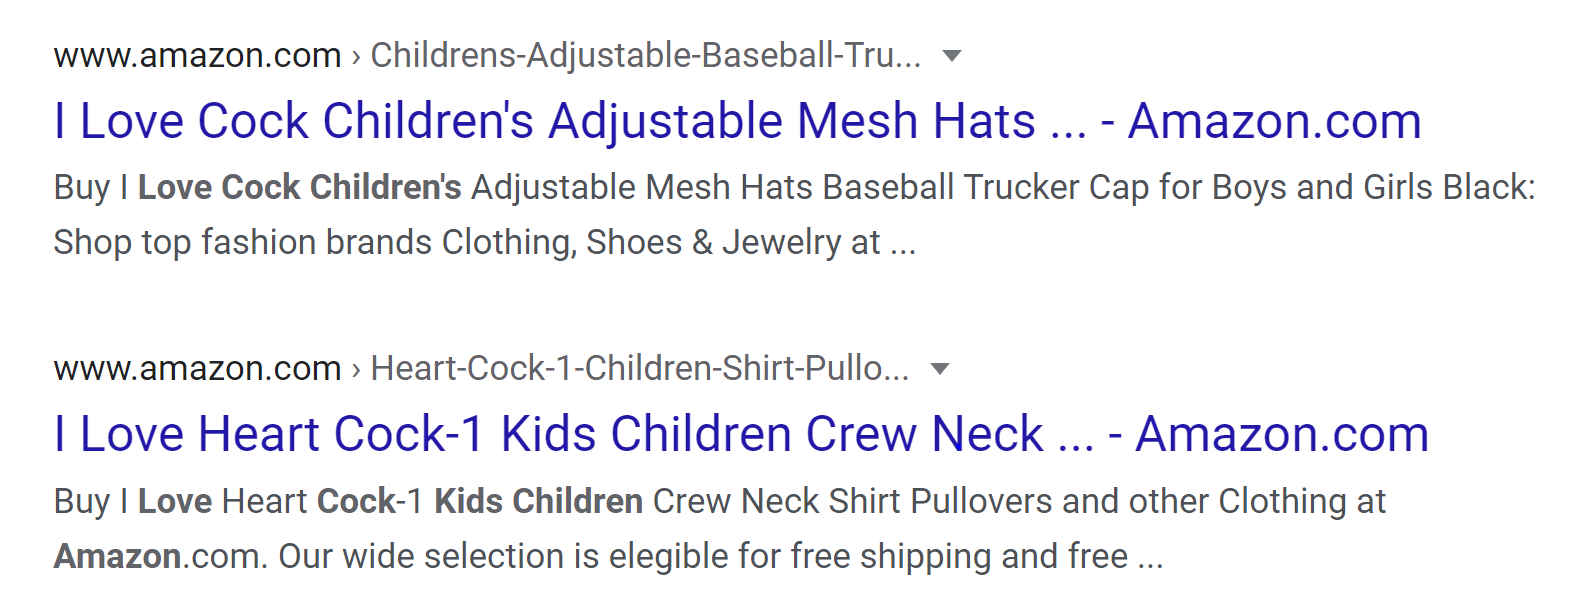 Amazon children's t-shirt search